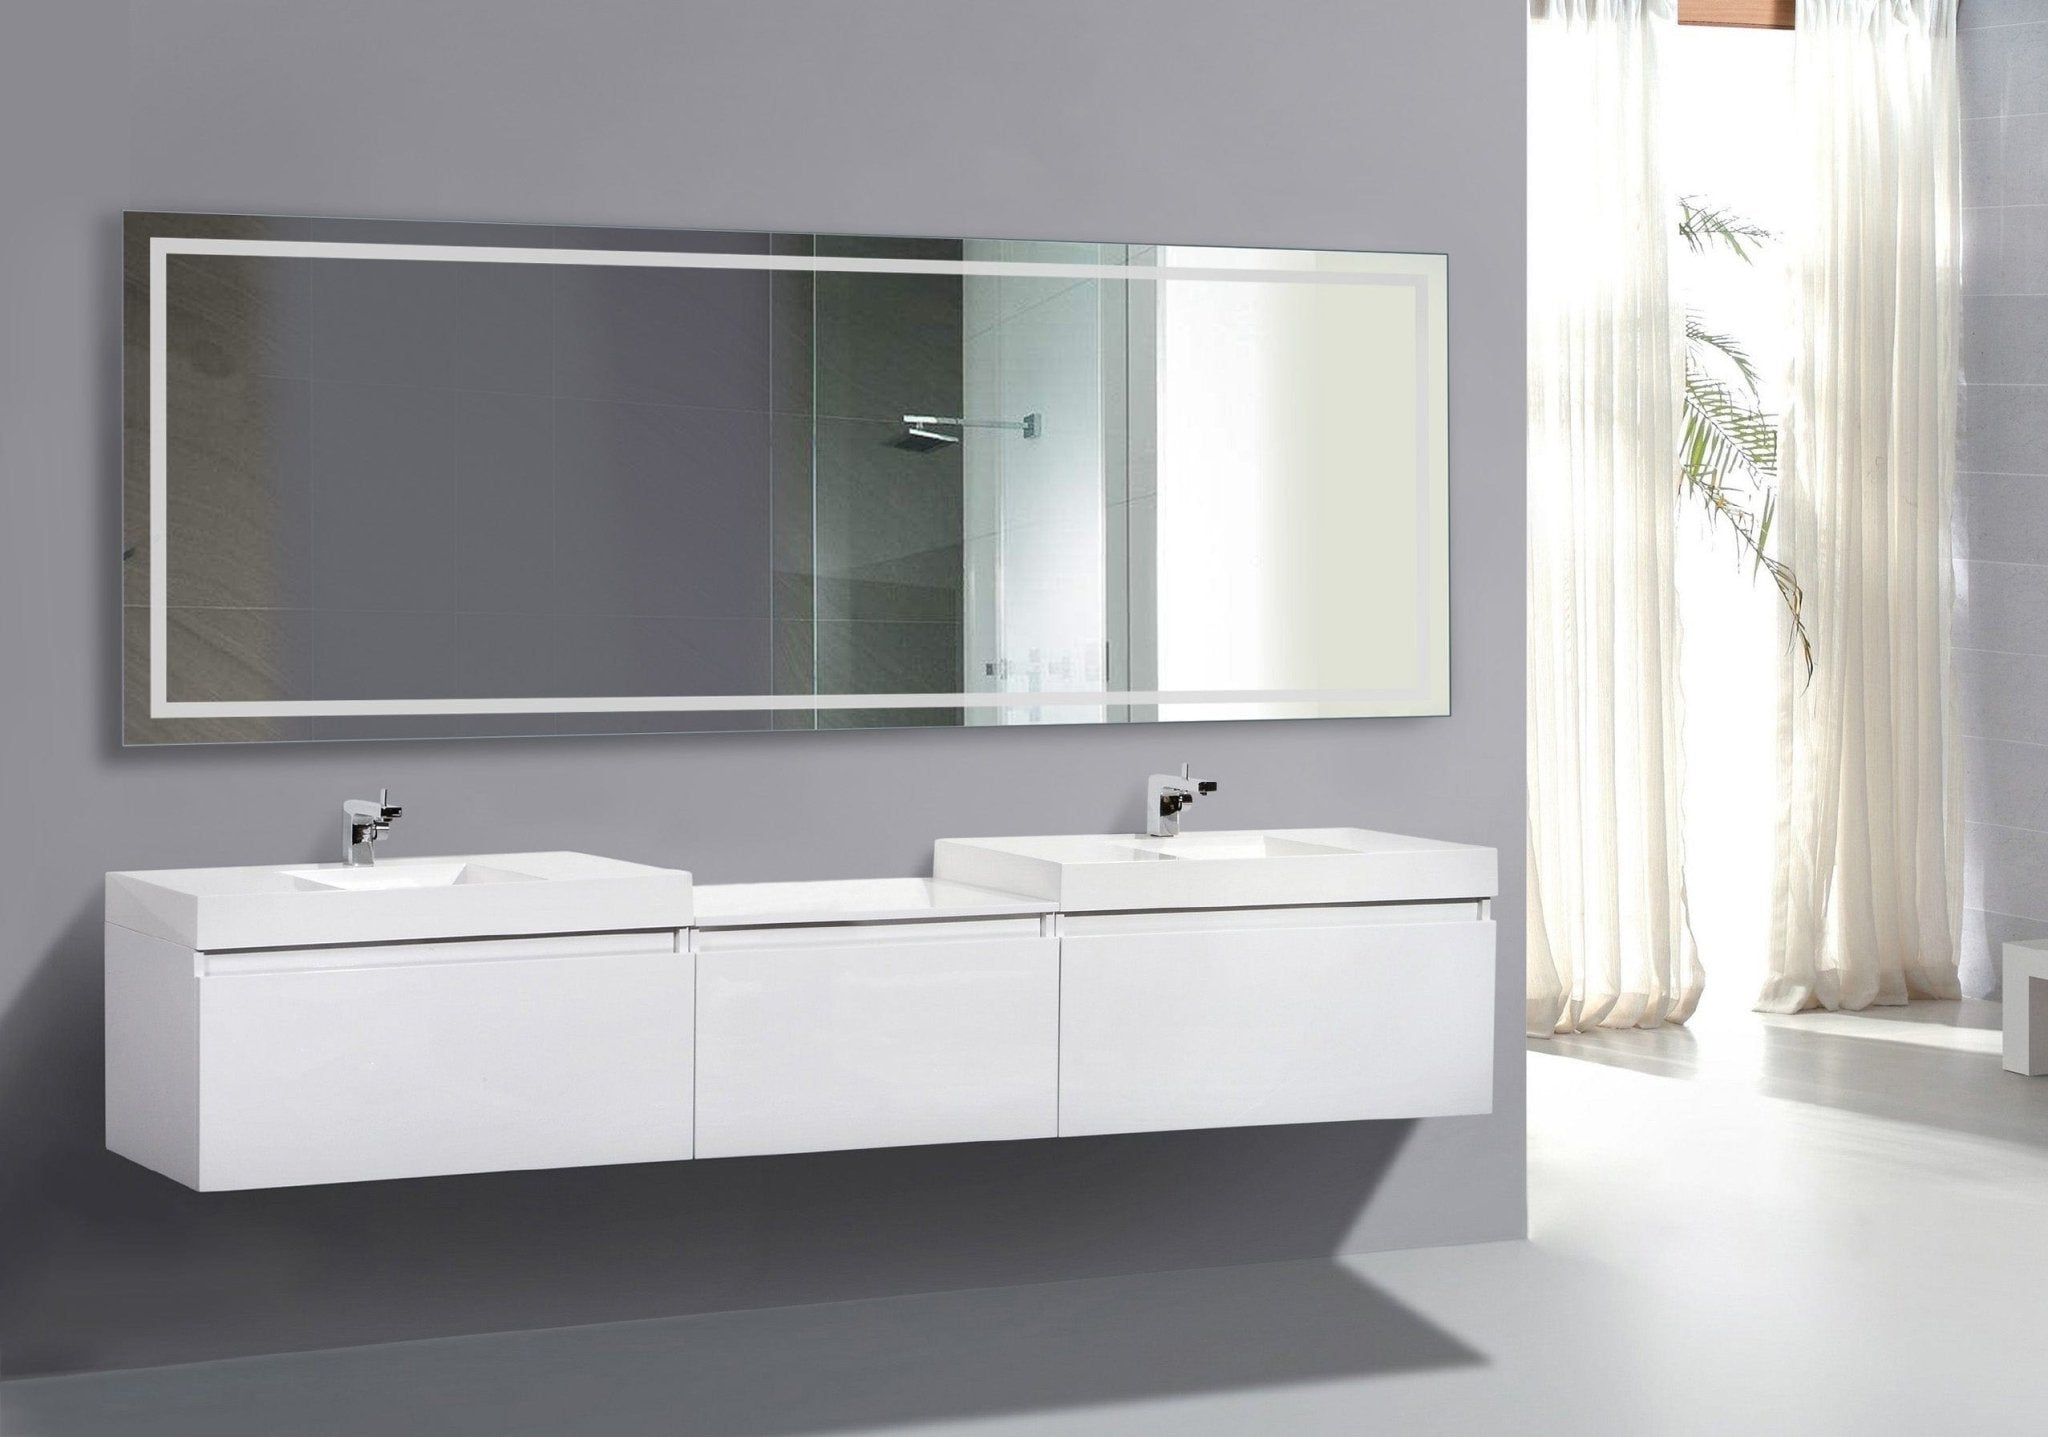 EXL 96" x 36" LED Lighted Bathroom Mirror - Molaix - Molaix850003475318Lighted Wall Mirror,RectangleEXL9636